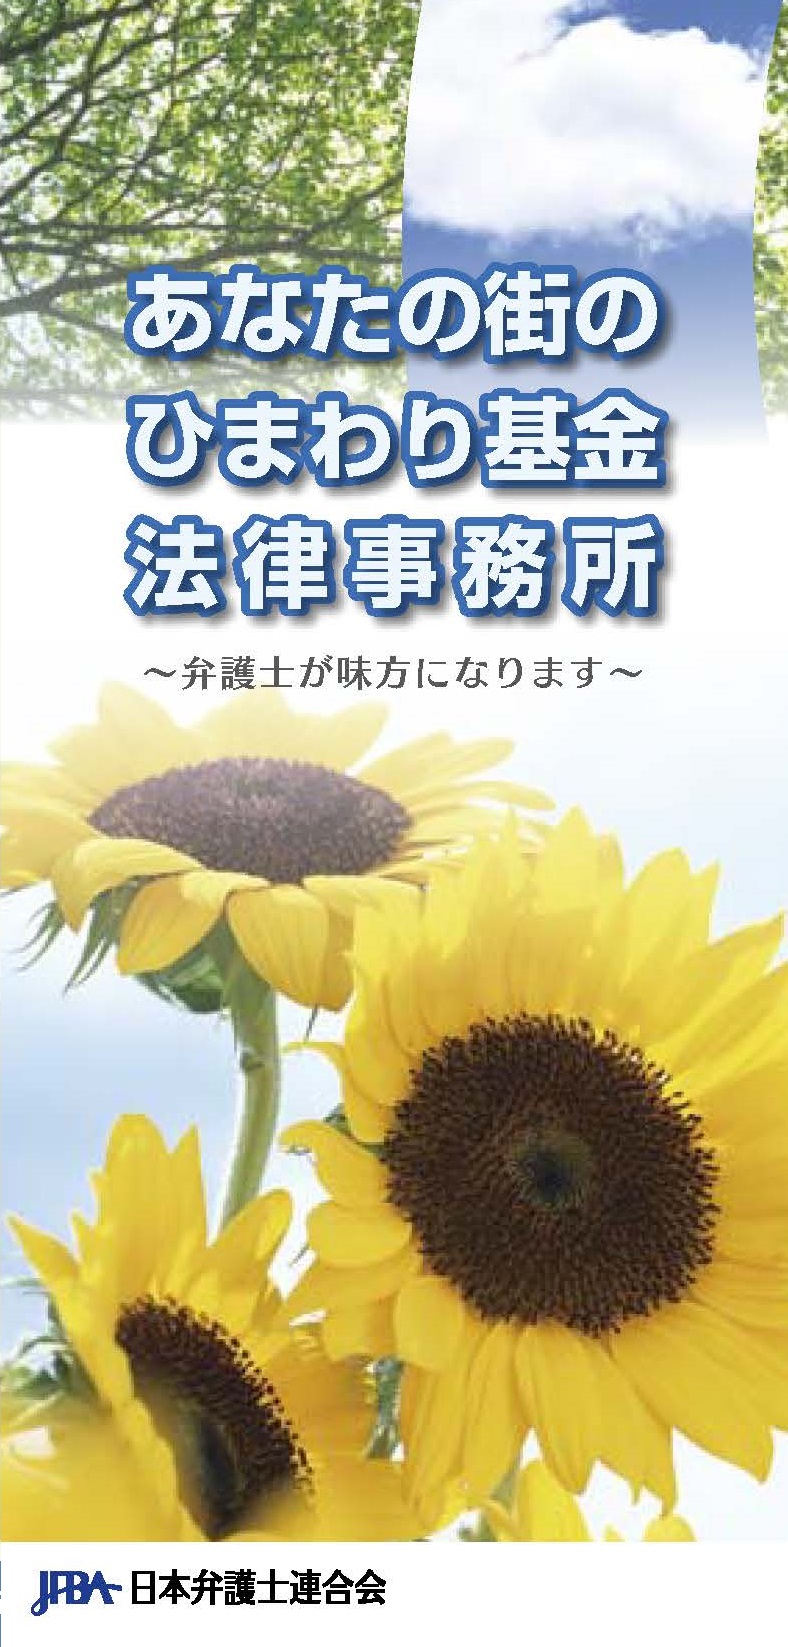 leaflet_himawarikikin.jpg